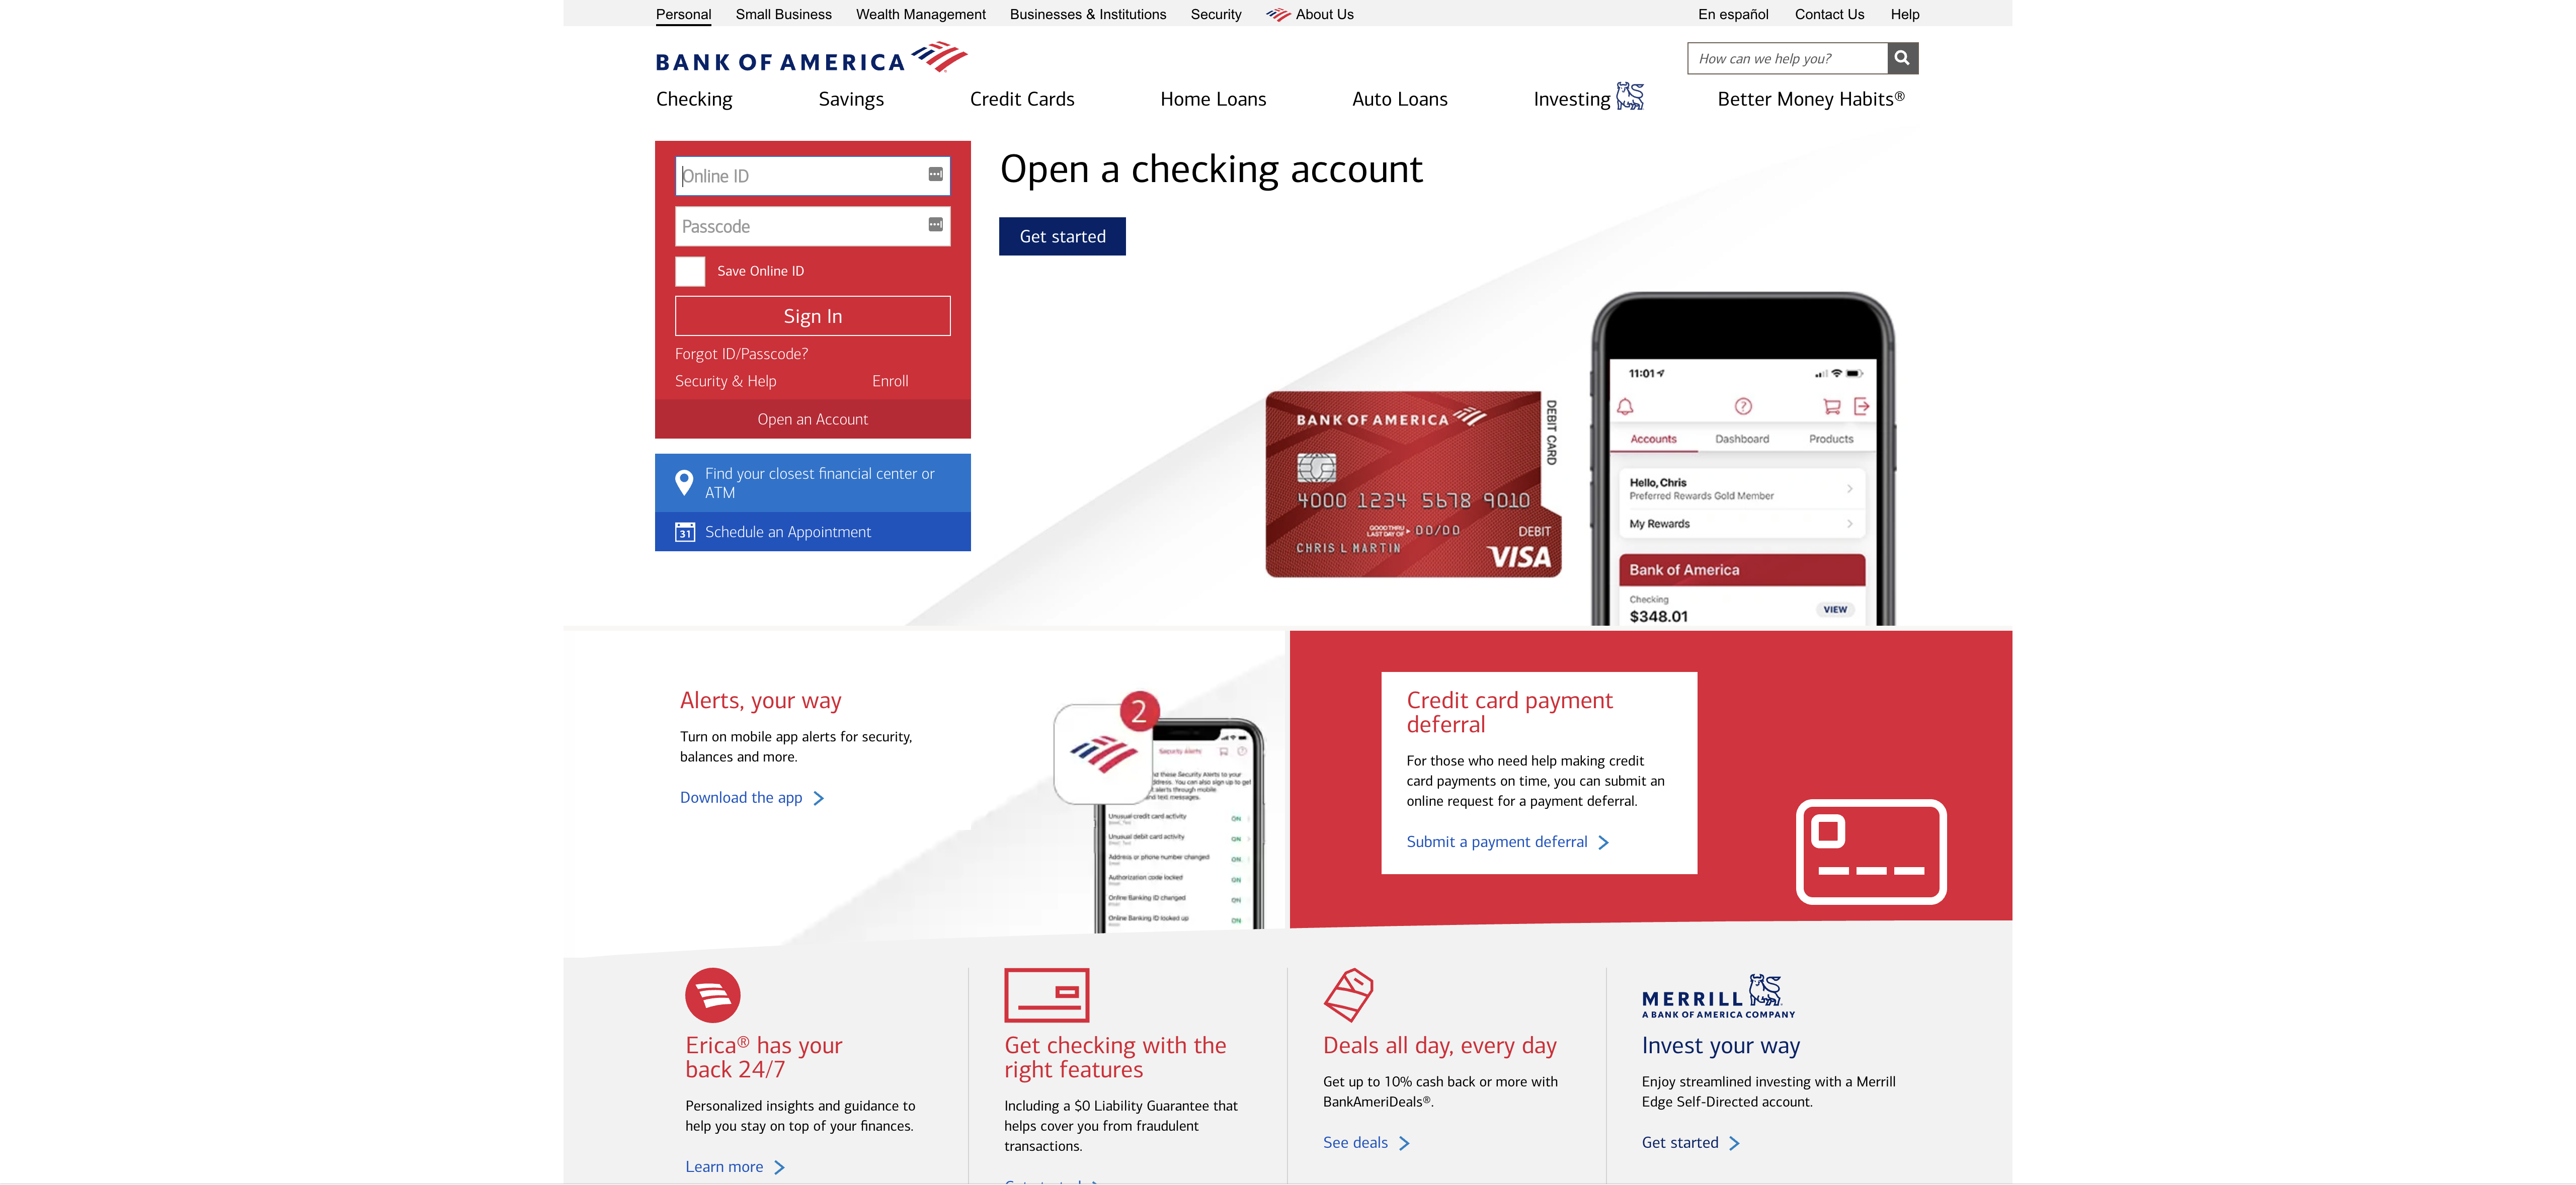 Bank of America Website